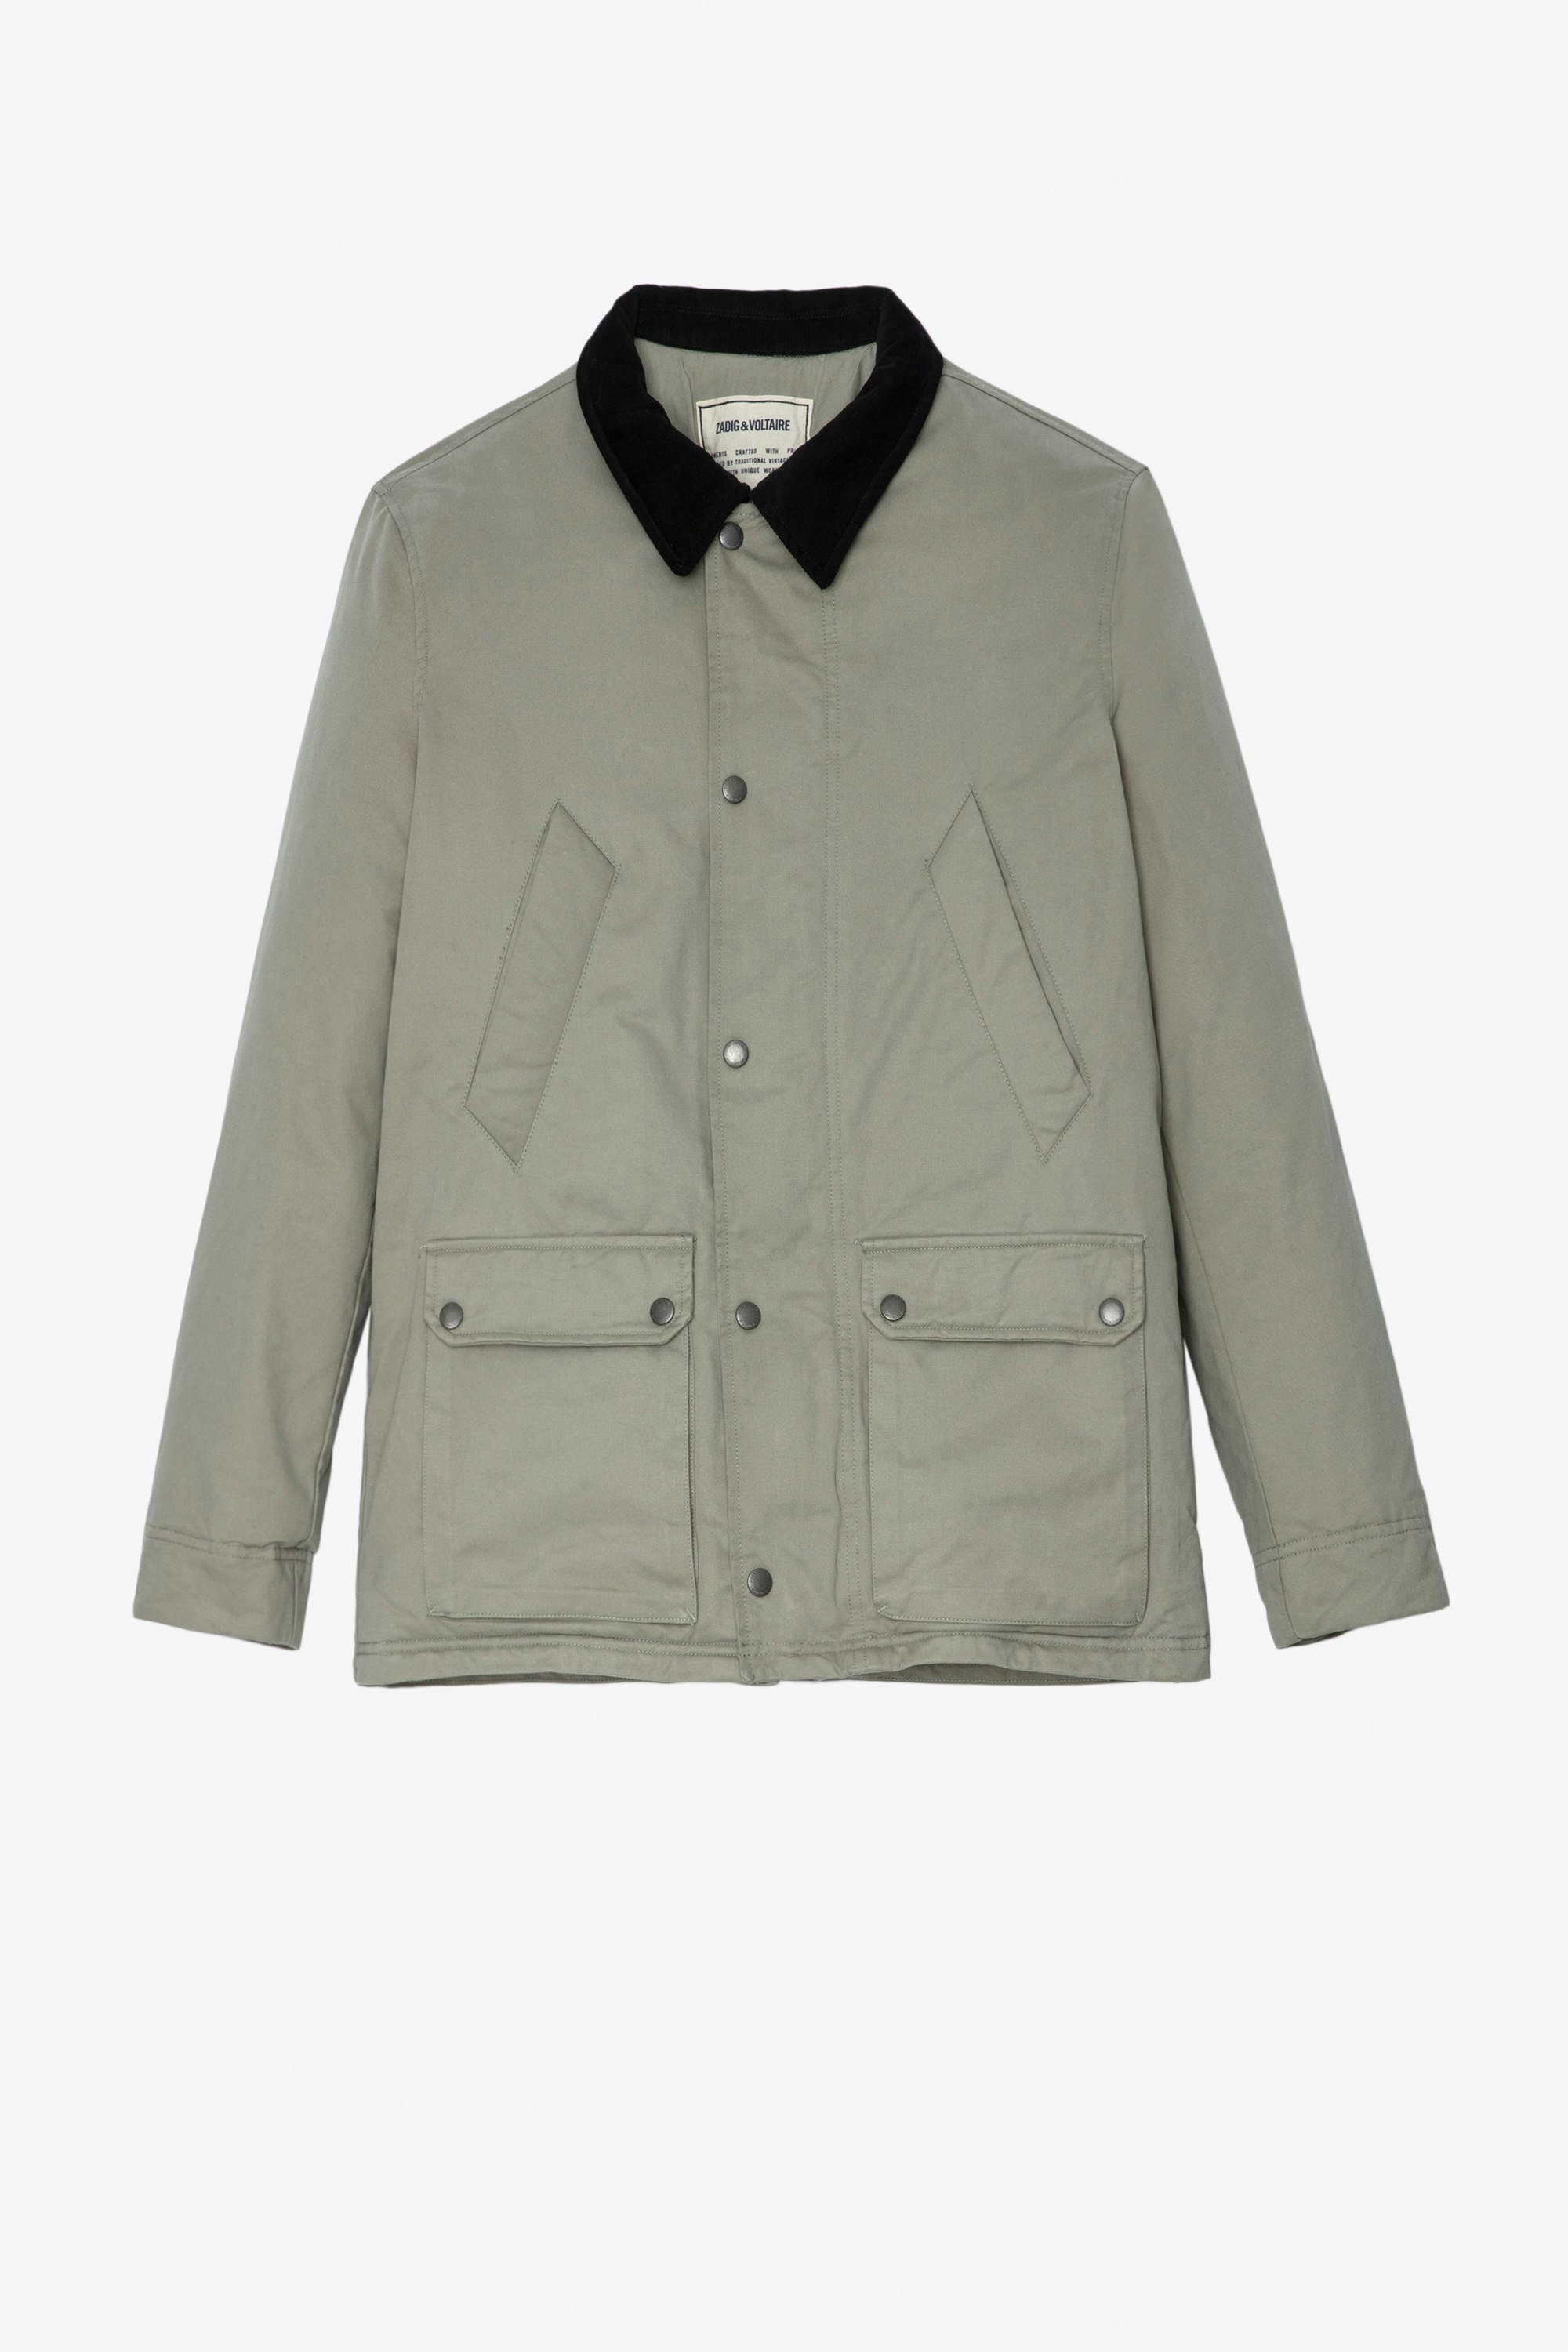 Bertie Jacket Men's reversible military jacket in khaki cotton with velvet collar